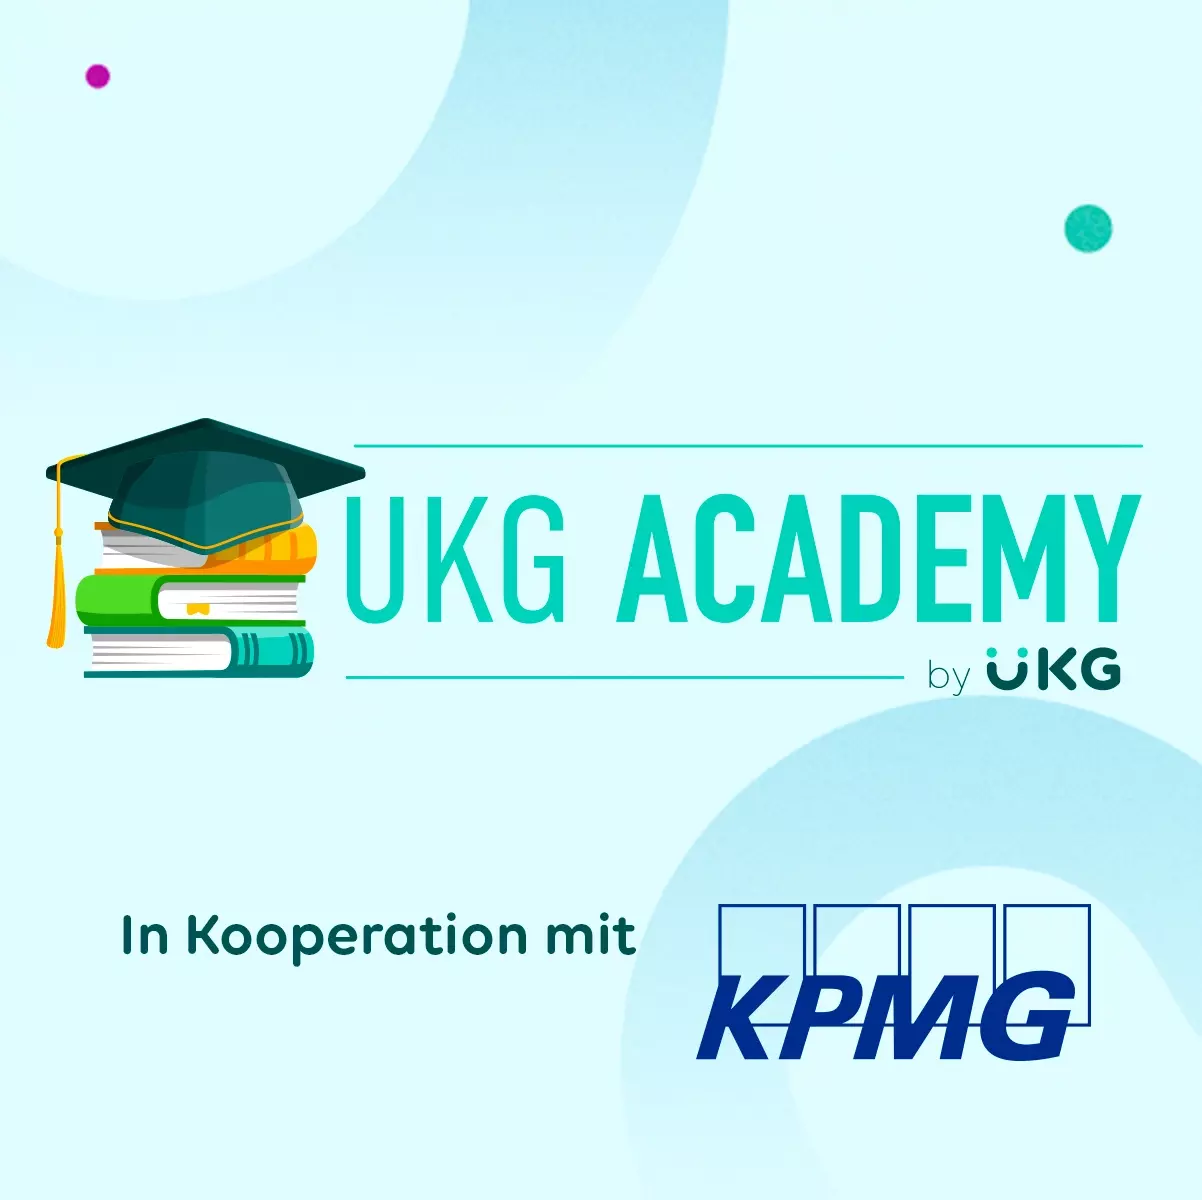 UKG Academy